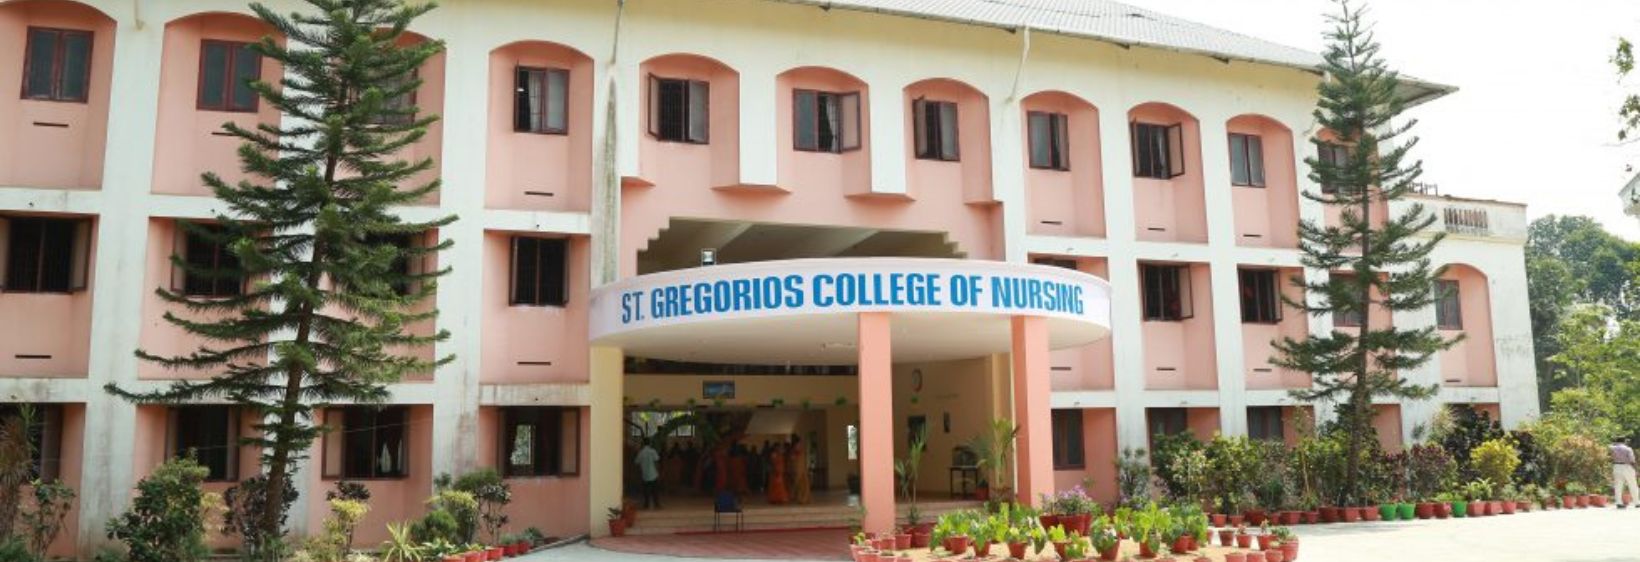 St Gregorios college of nursing - Pathanamthitta